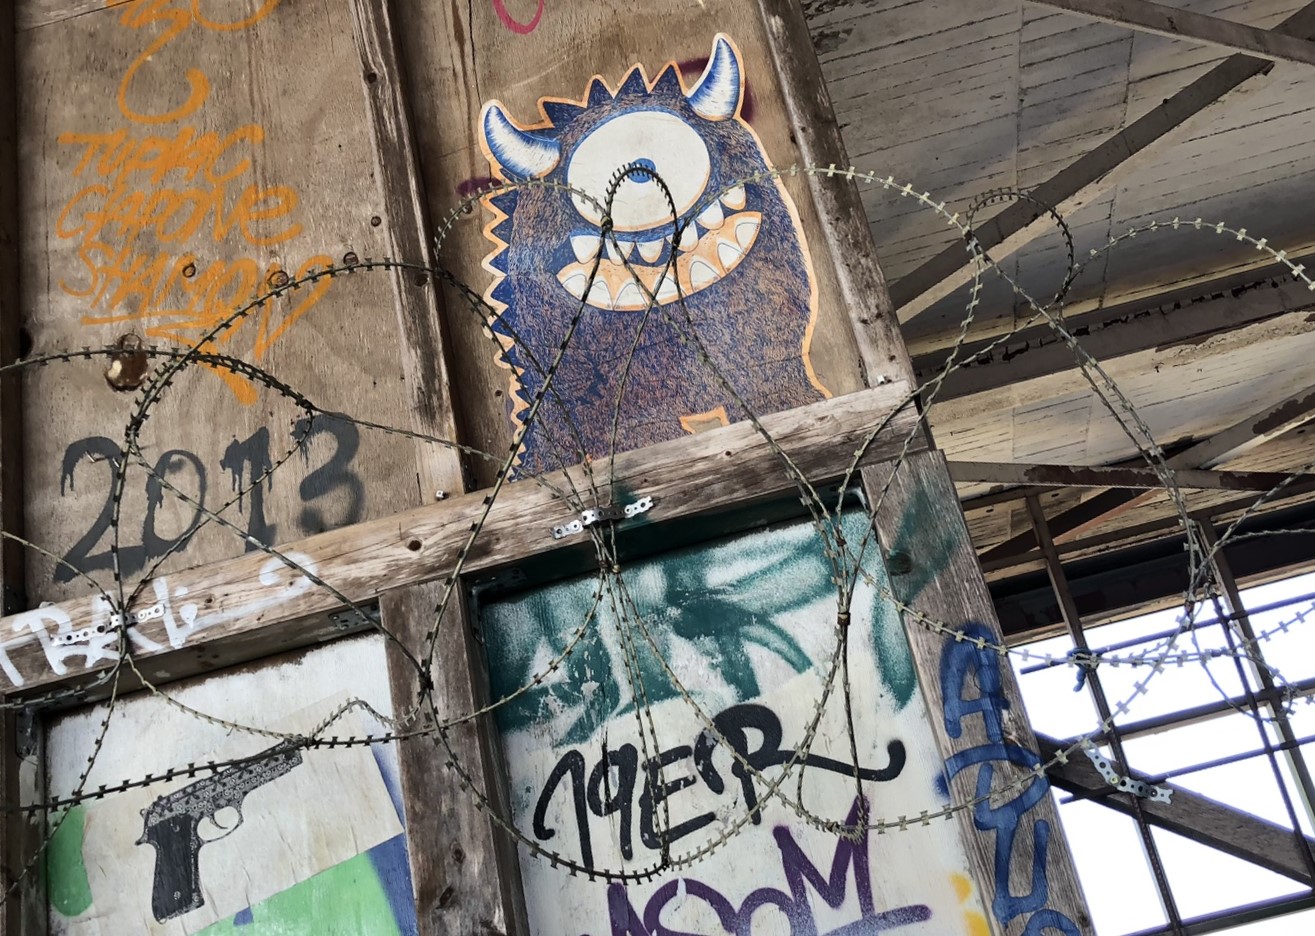 Graffiti Monster im Kuppelturm der Radarstation Teufelsberg in Berlin, unbekannter Künstler